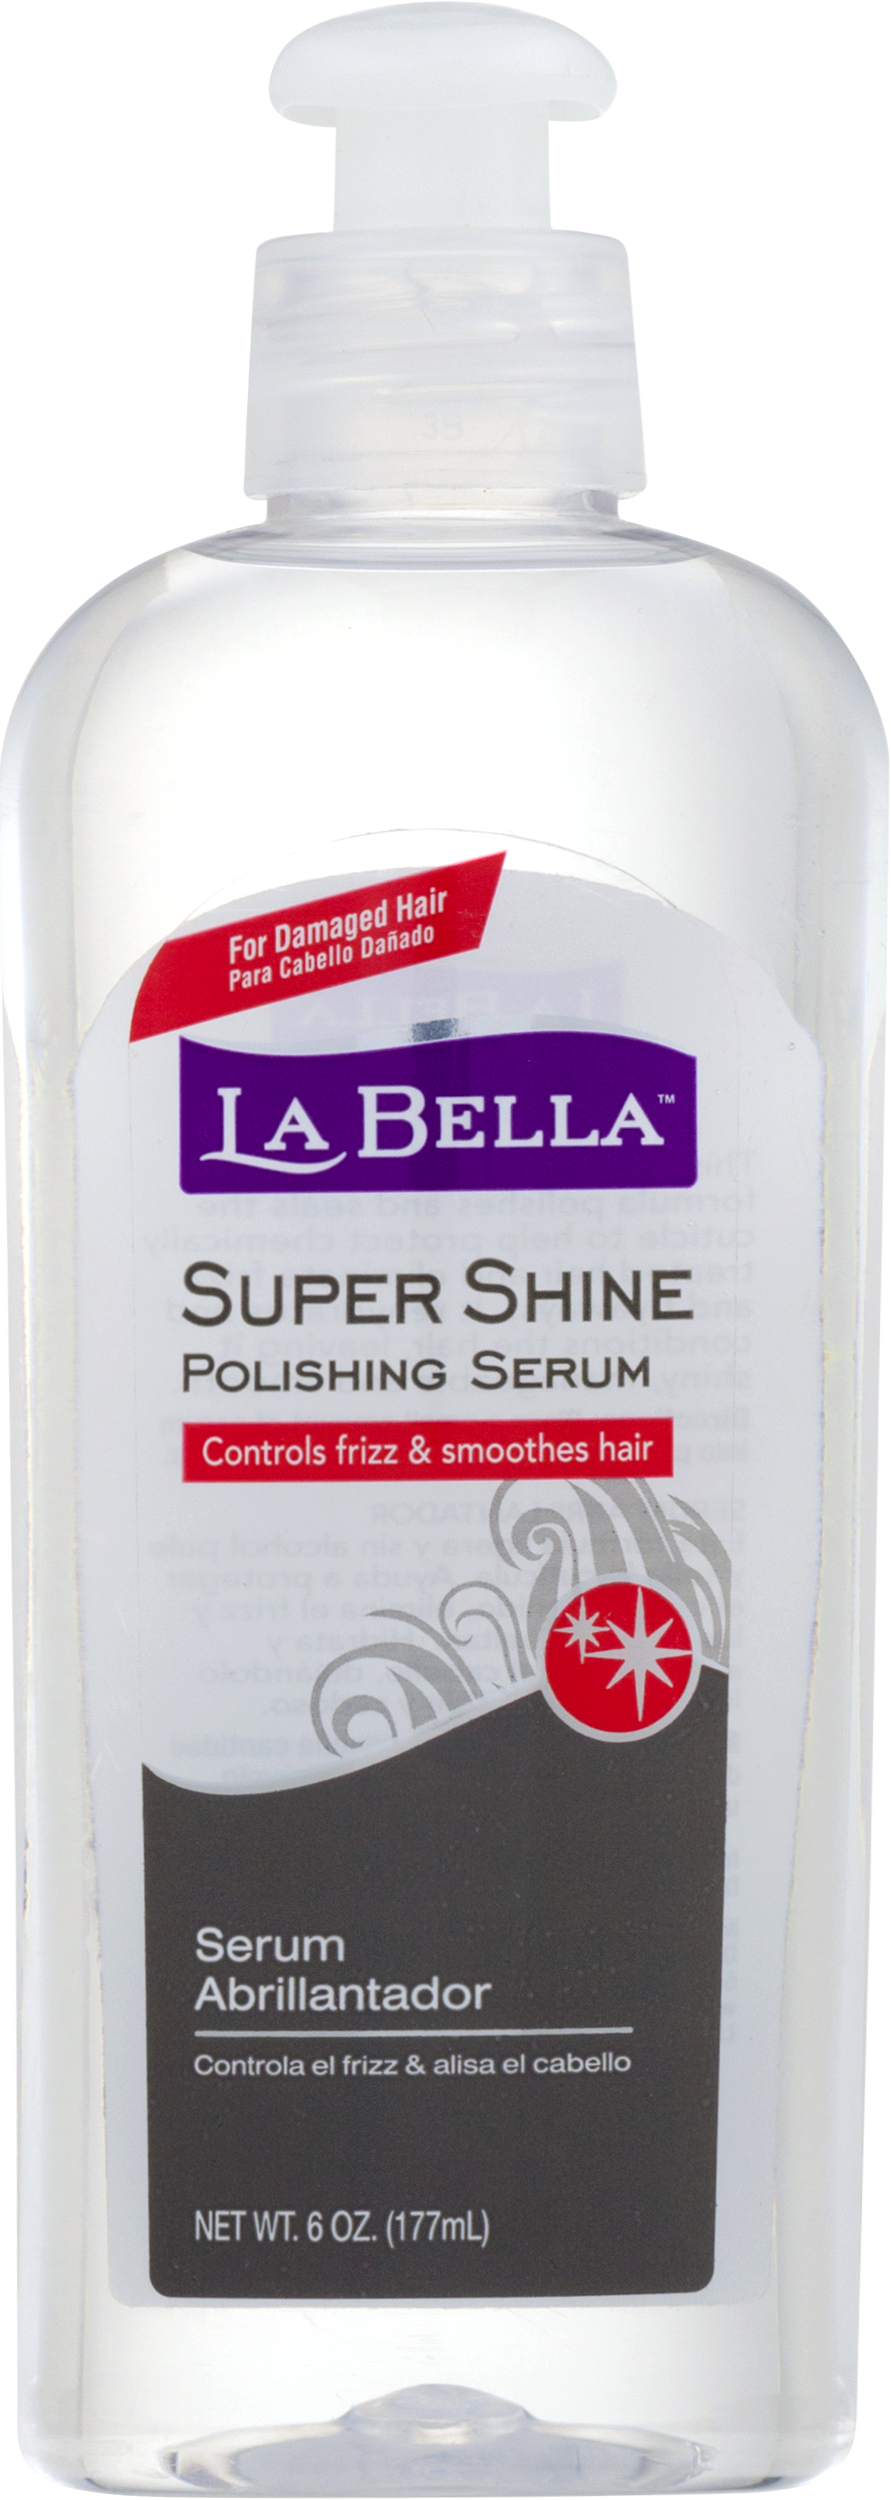 Newhall Laboratories La Bella Polishing Serum 6 oz - image 4 of 7